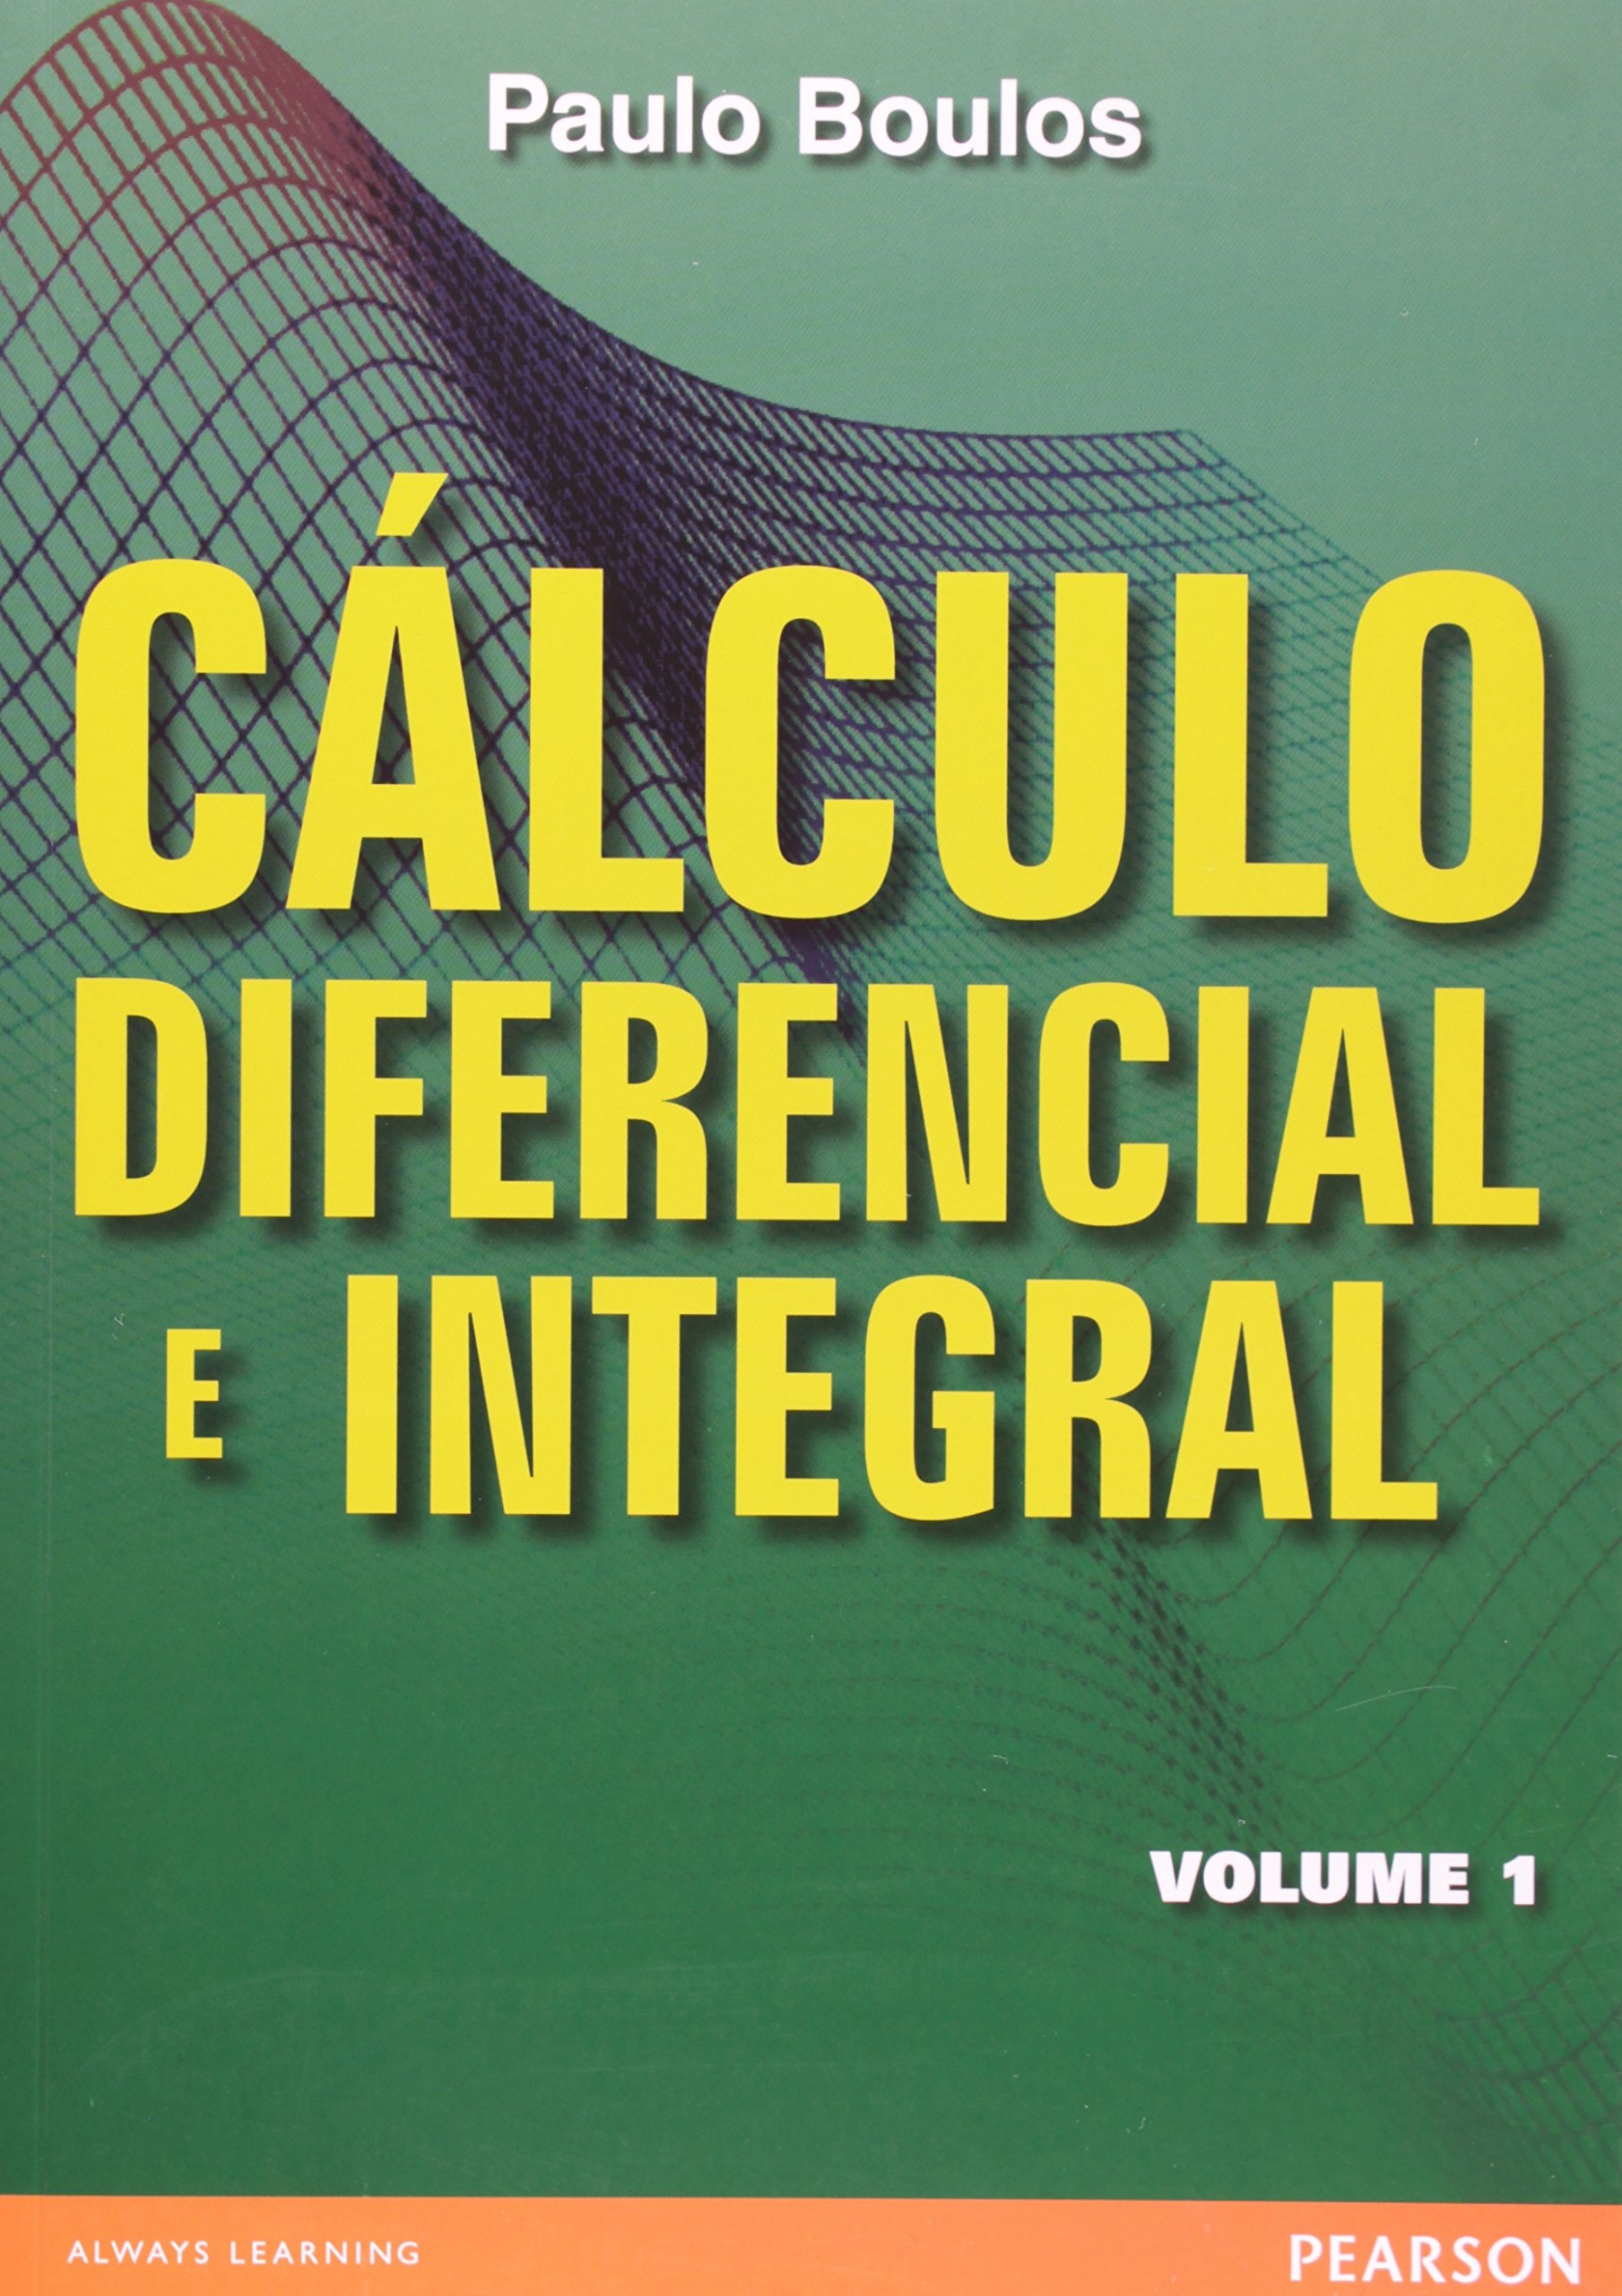 Calculo Diferencial e Integral Pack